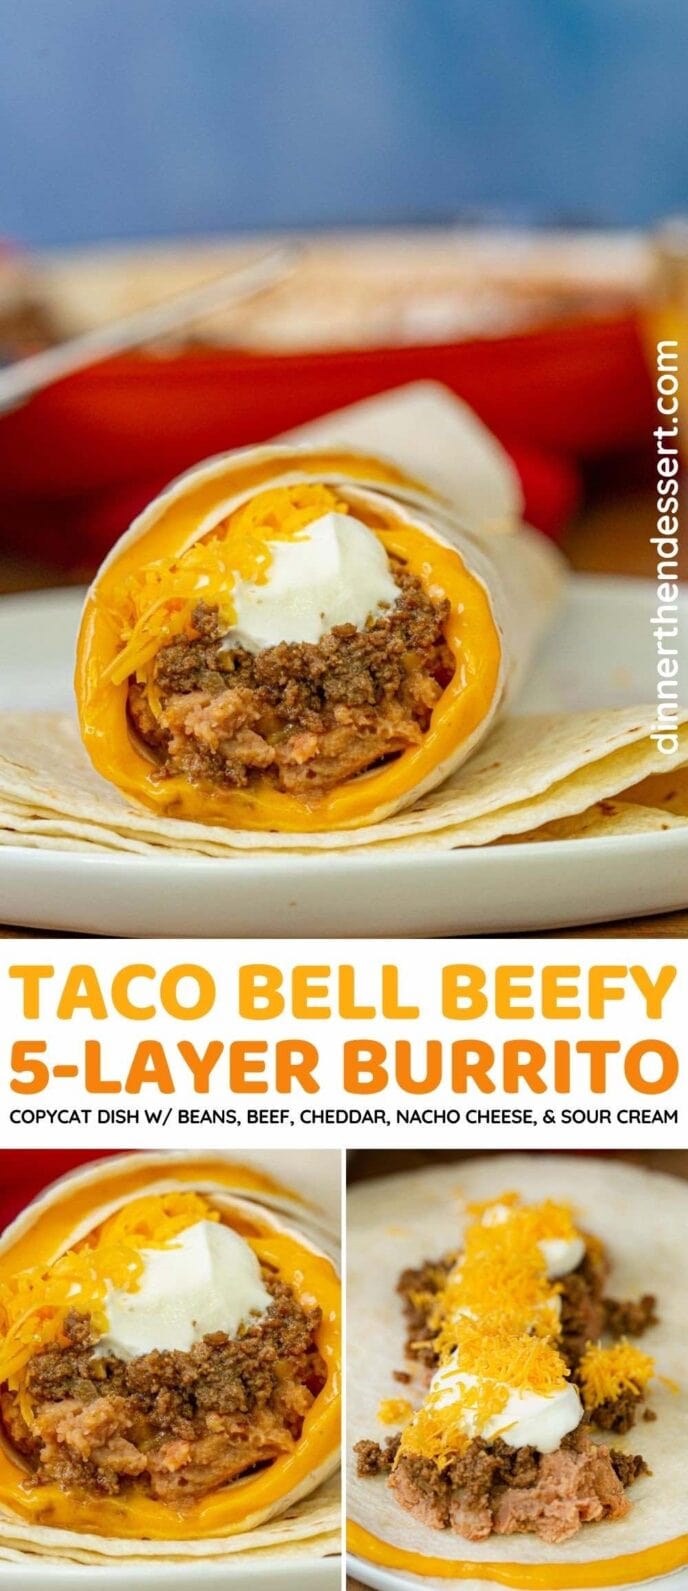 Beefy 5 Layer Burrito collage